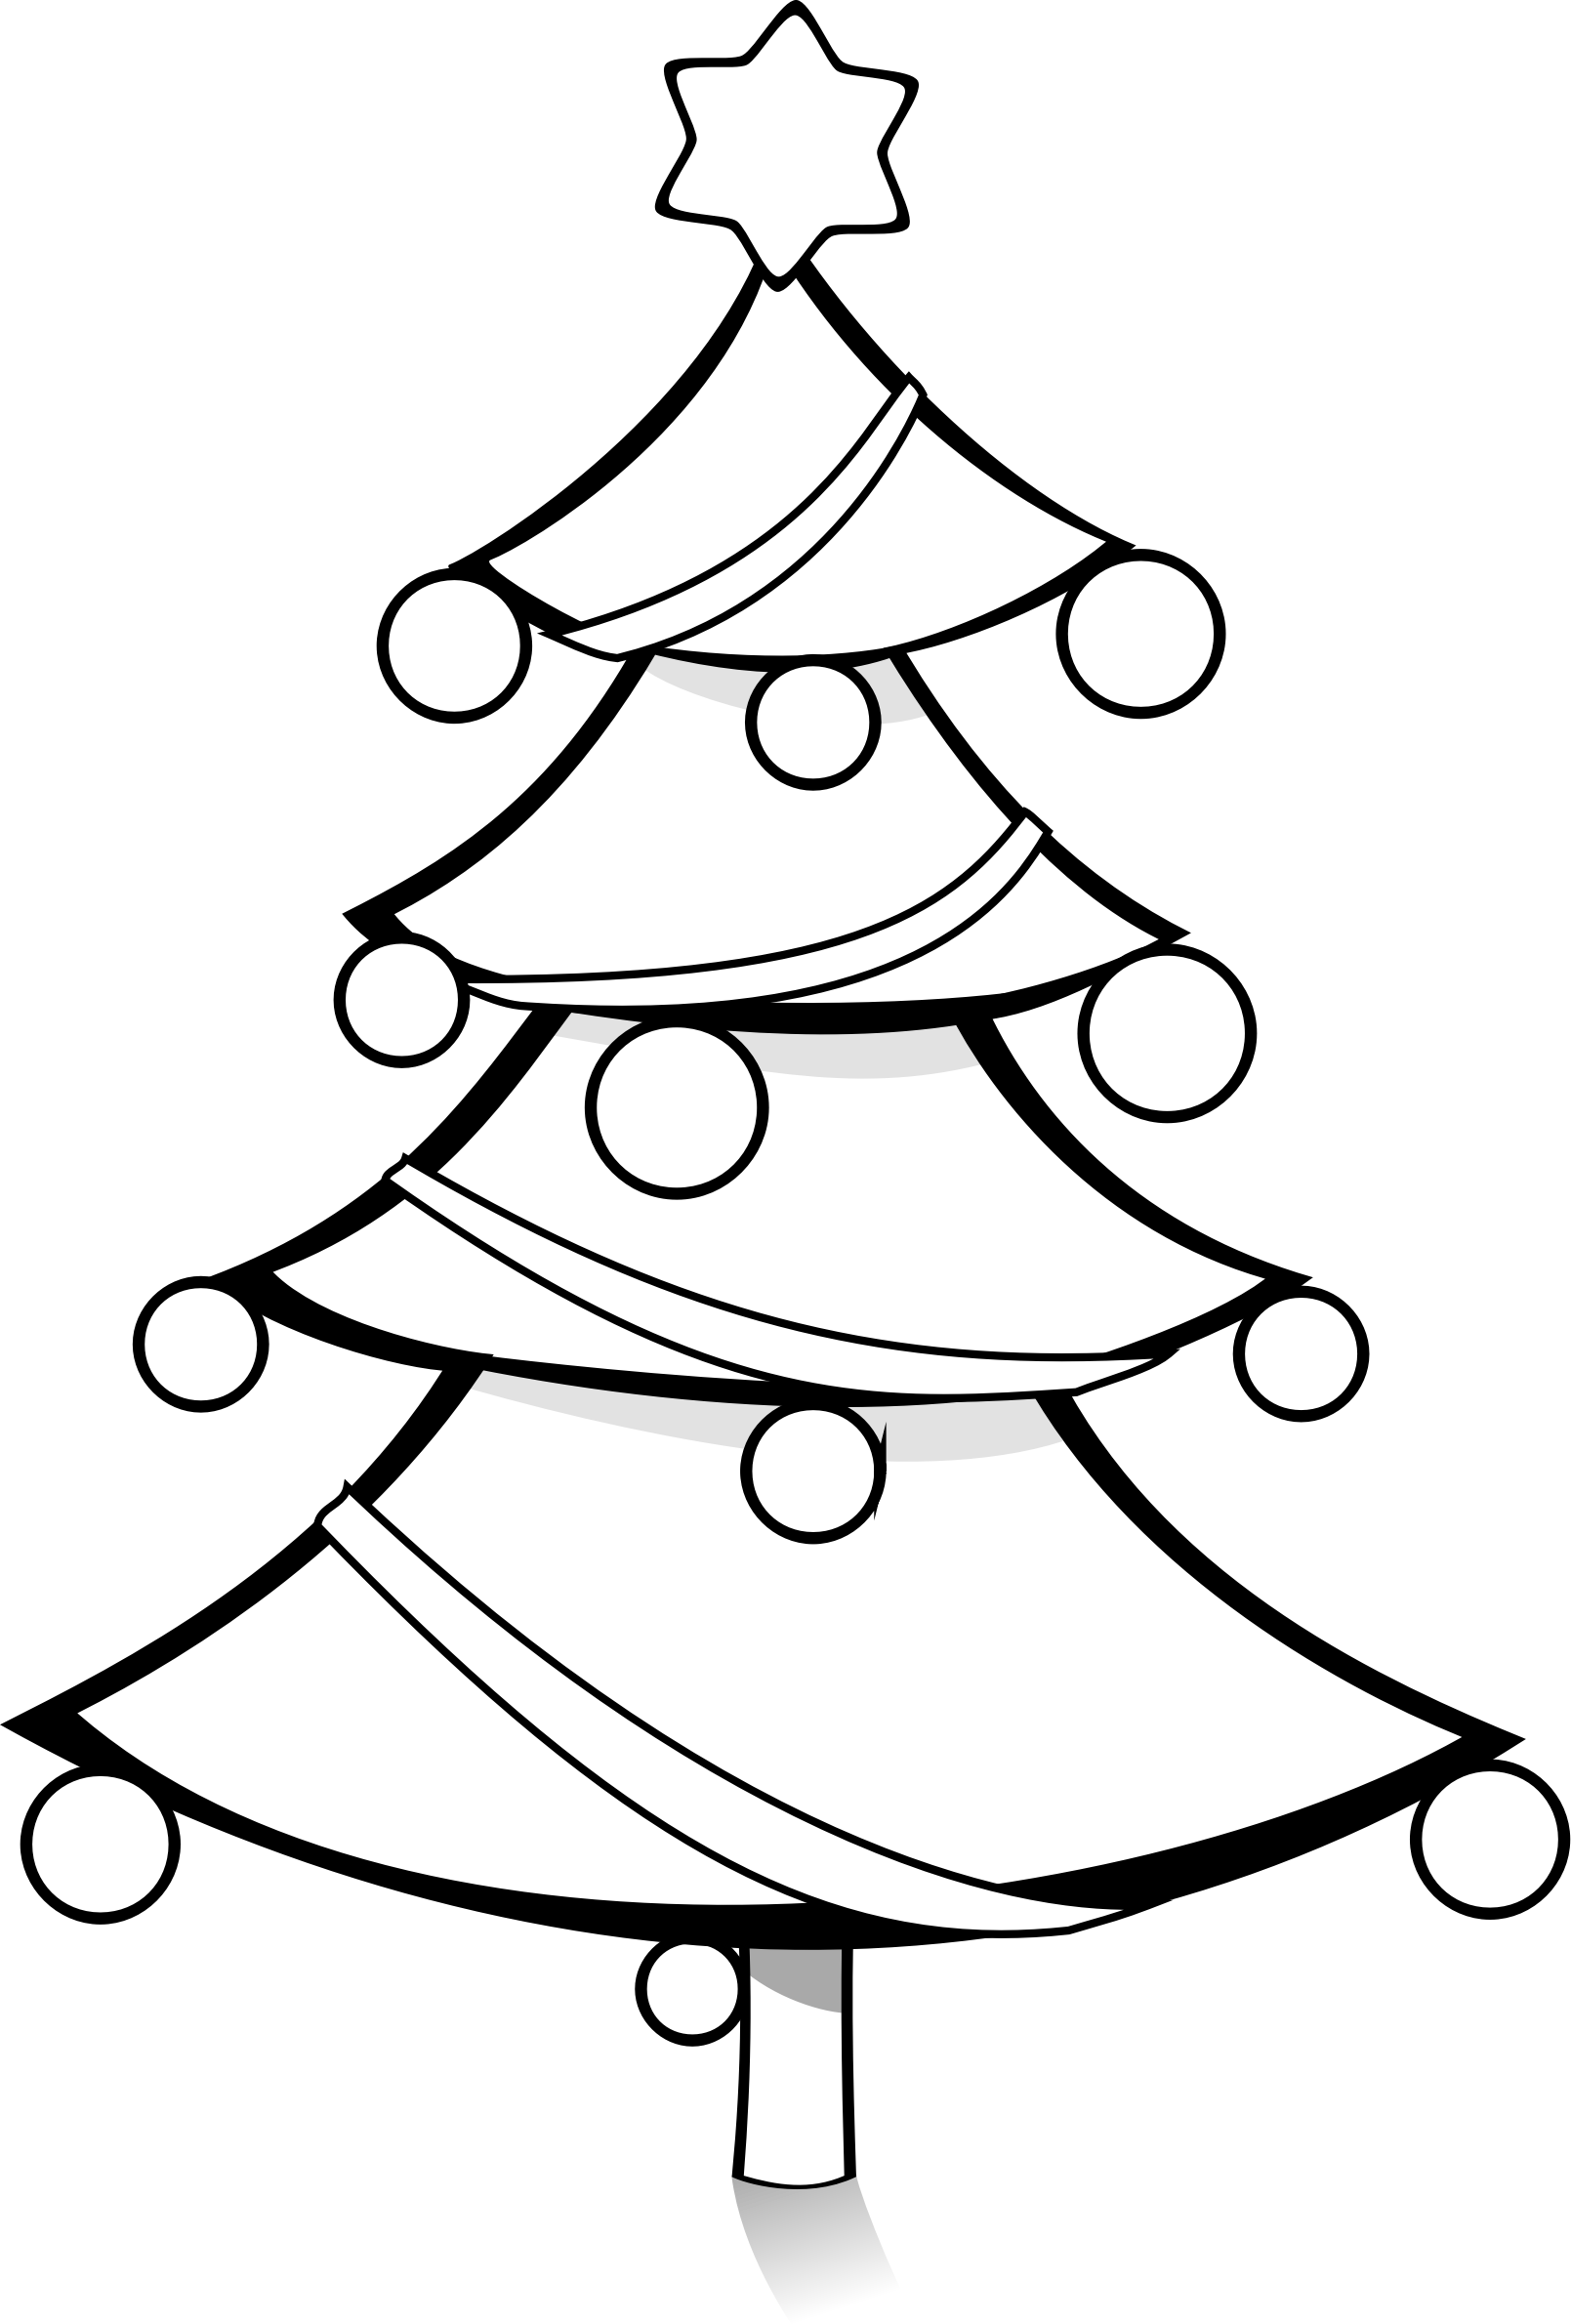 Christmas tree black and white black and white xmas tree